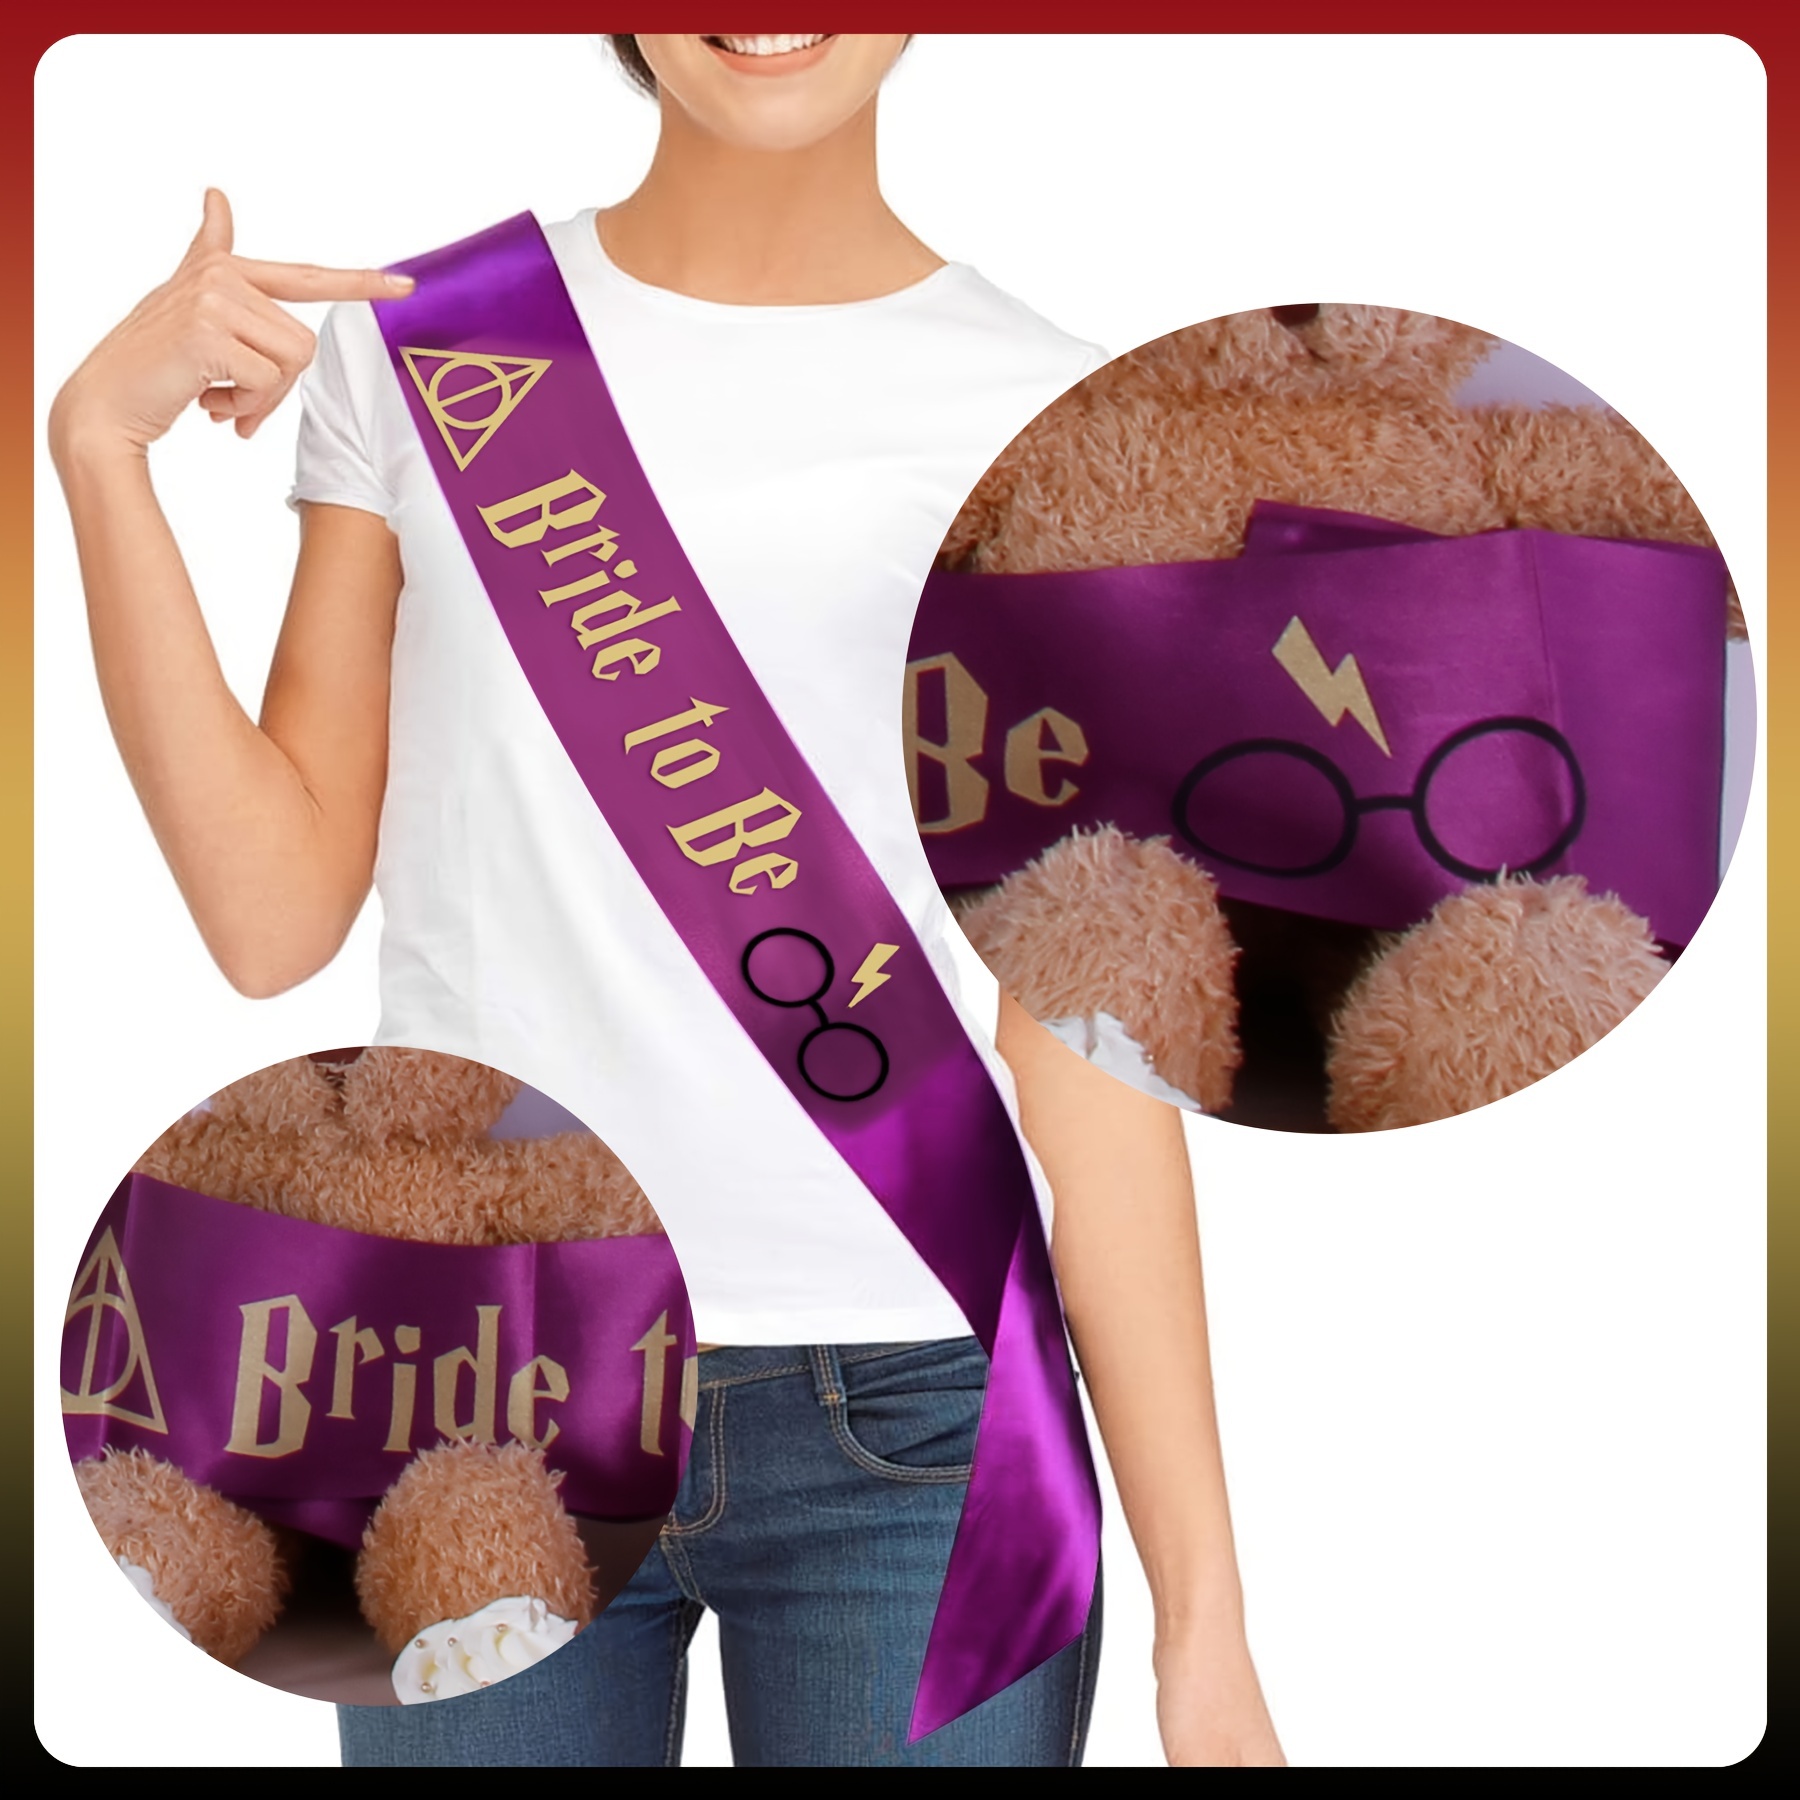 Potter frenchy party - Shopping : les doodles Harry Potter de  KiraKiradoodles - mug, poster, tote bag